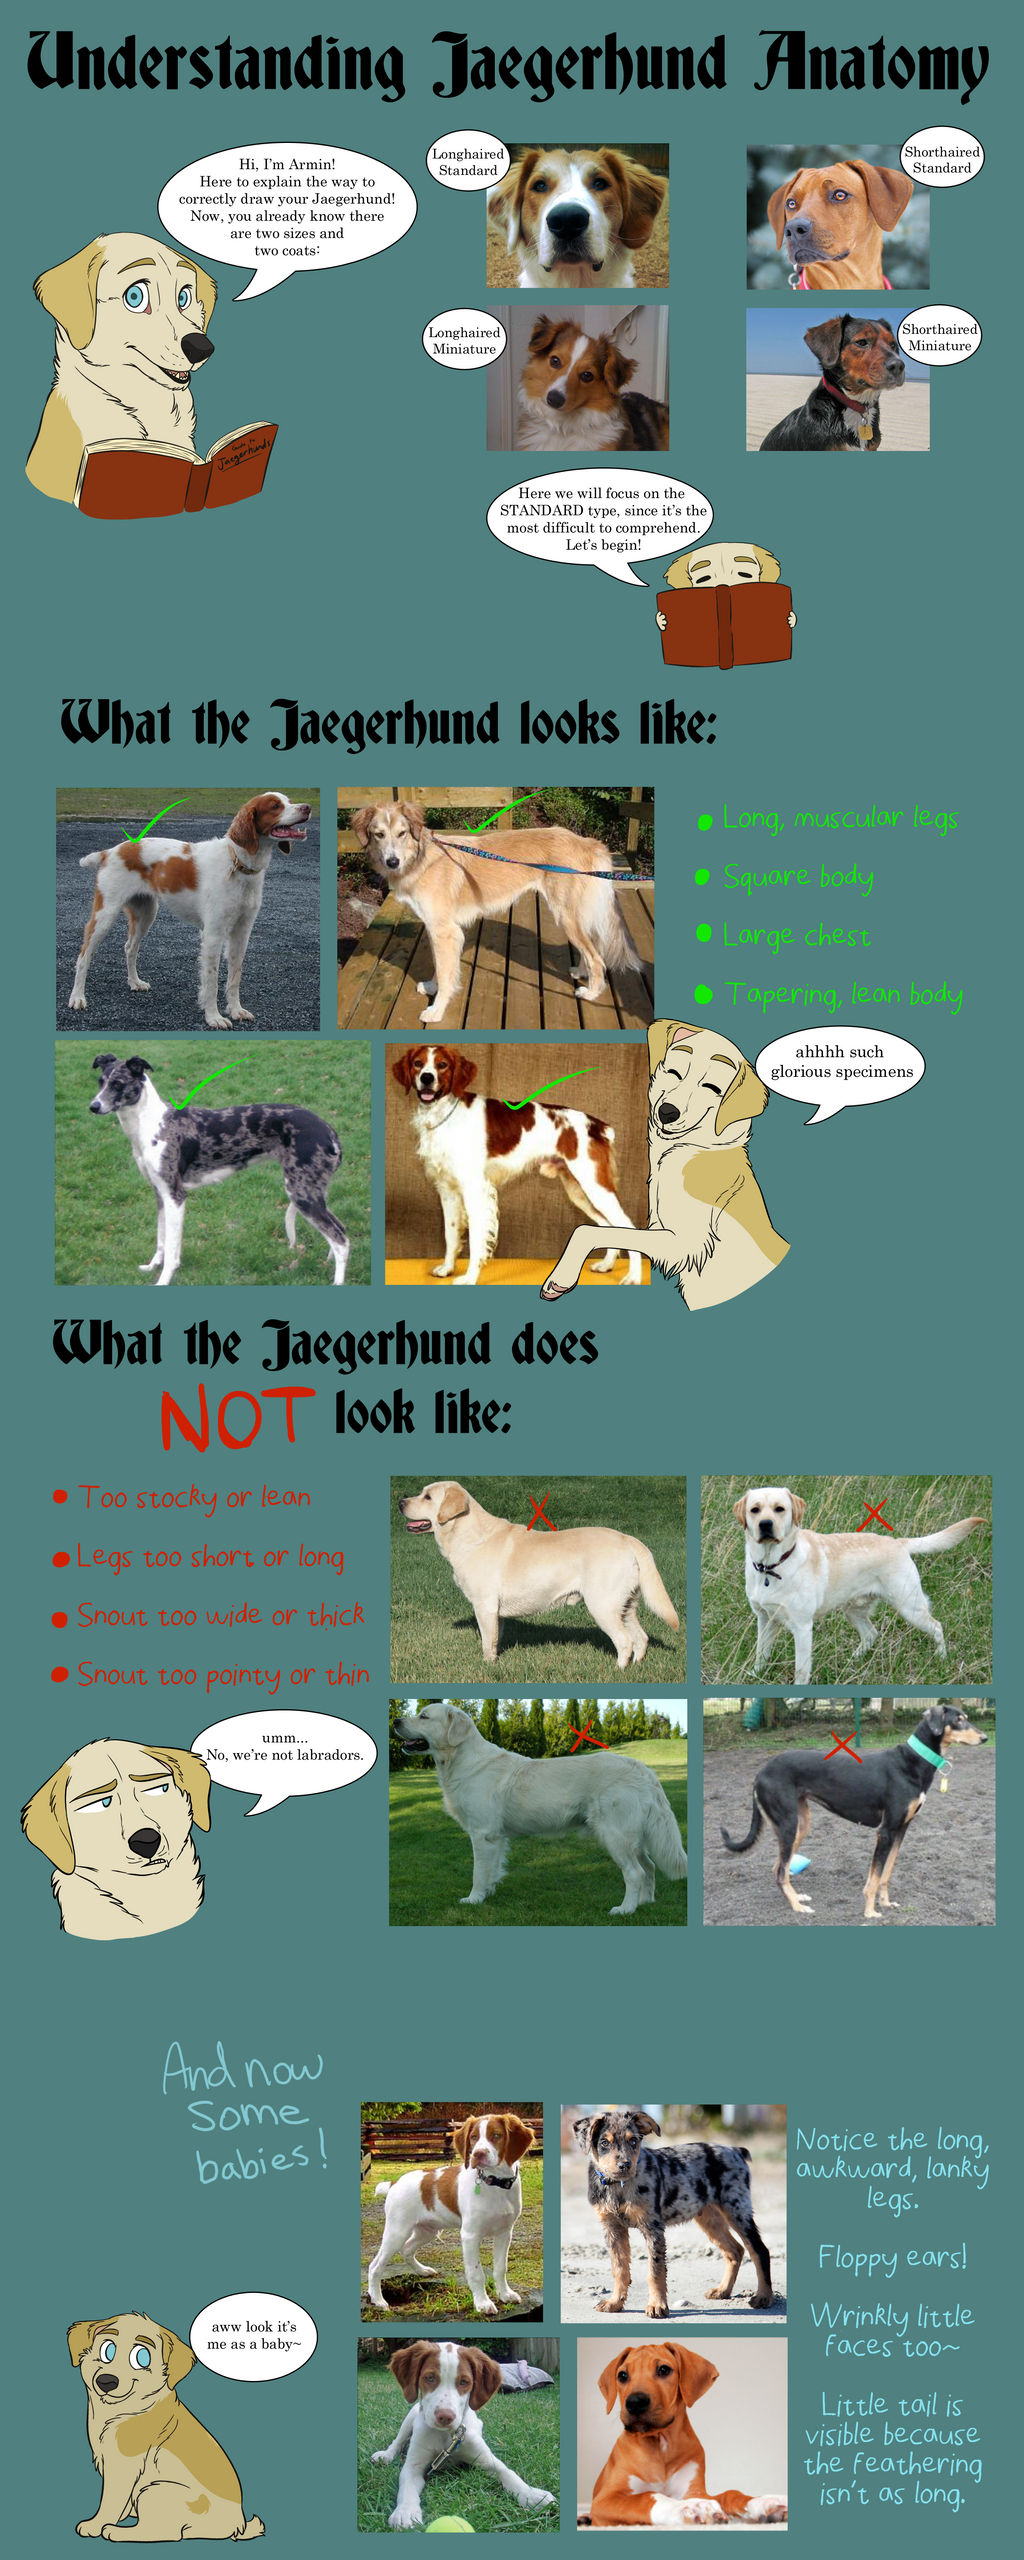 Understanding Jaegerhund Anatomy